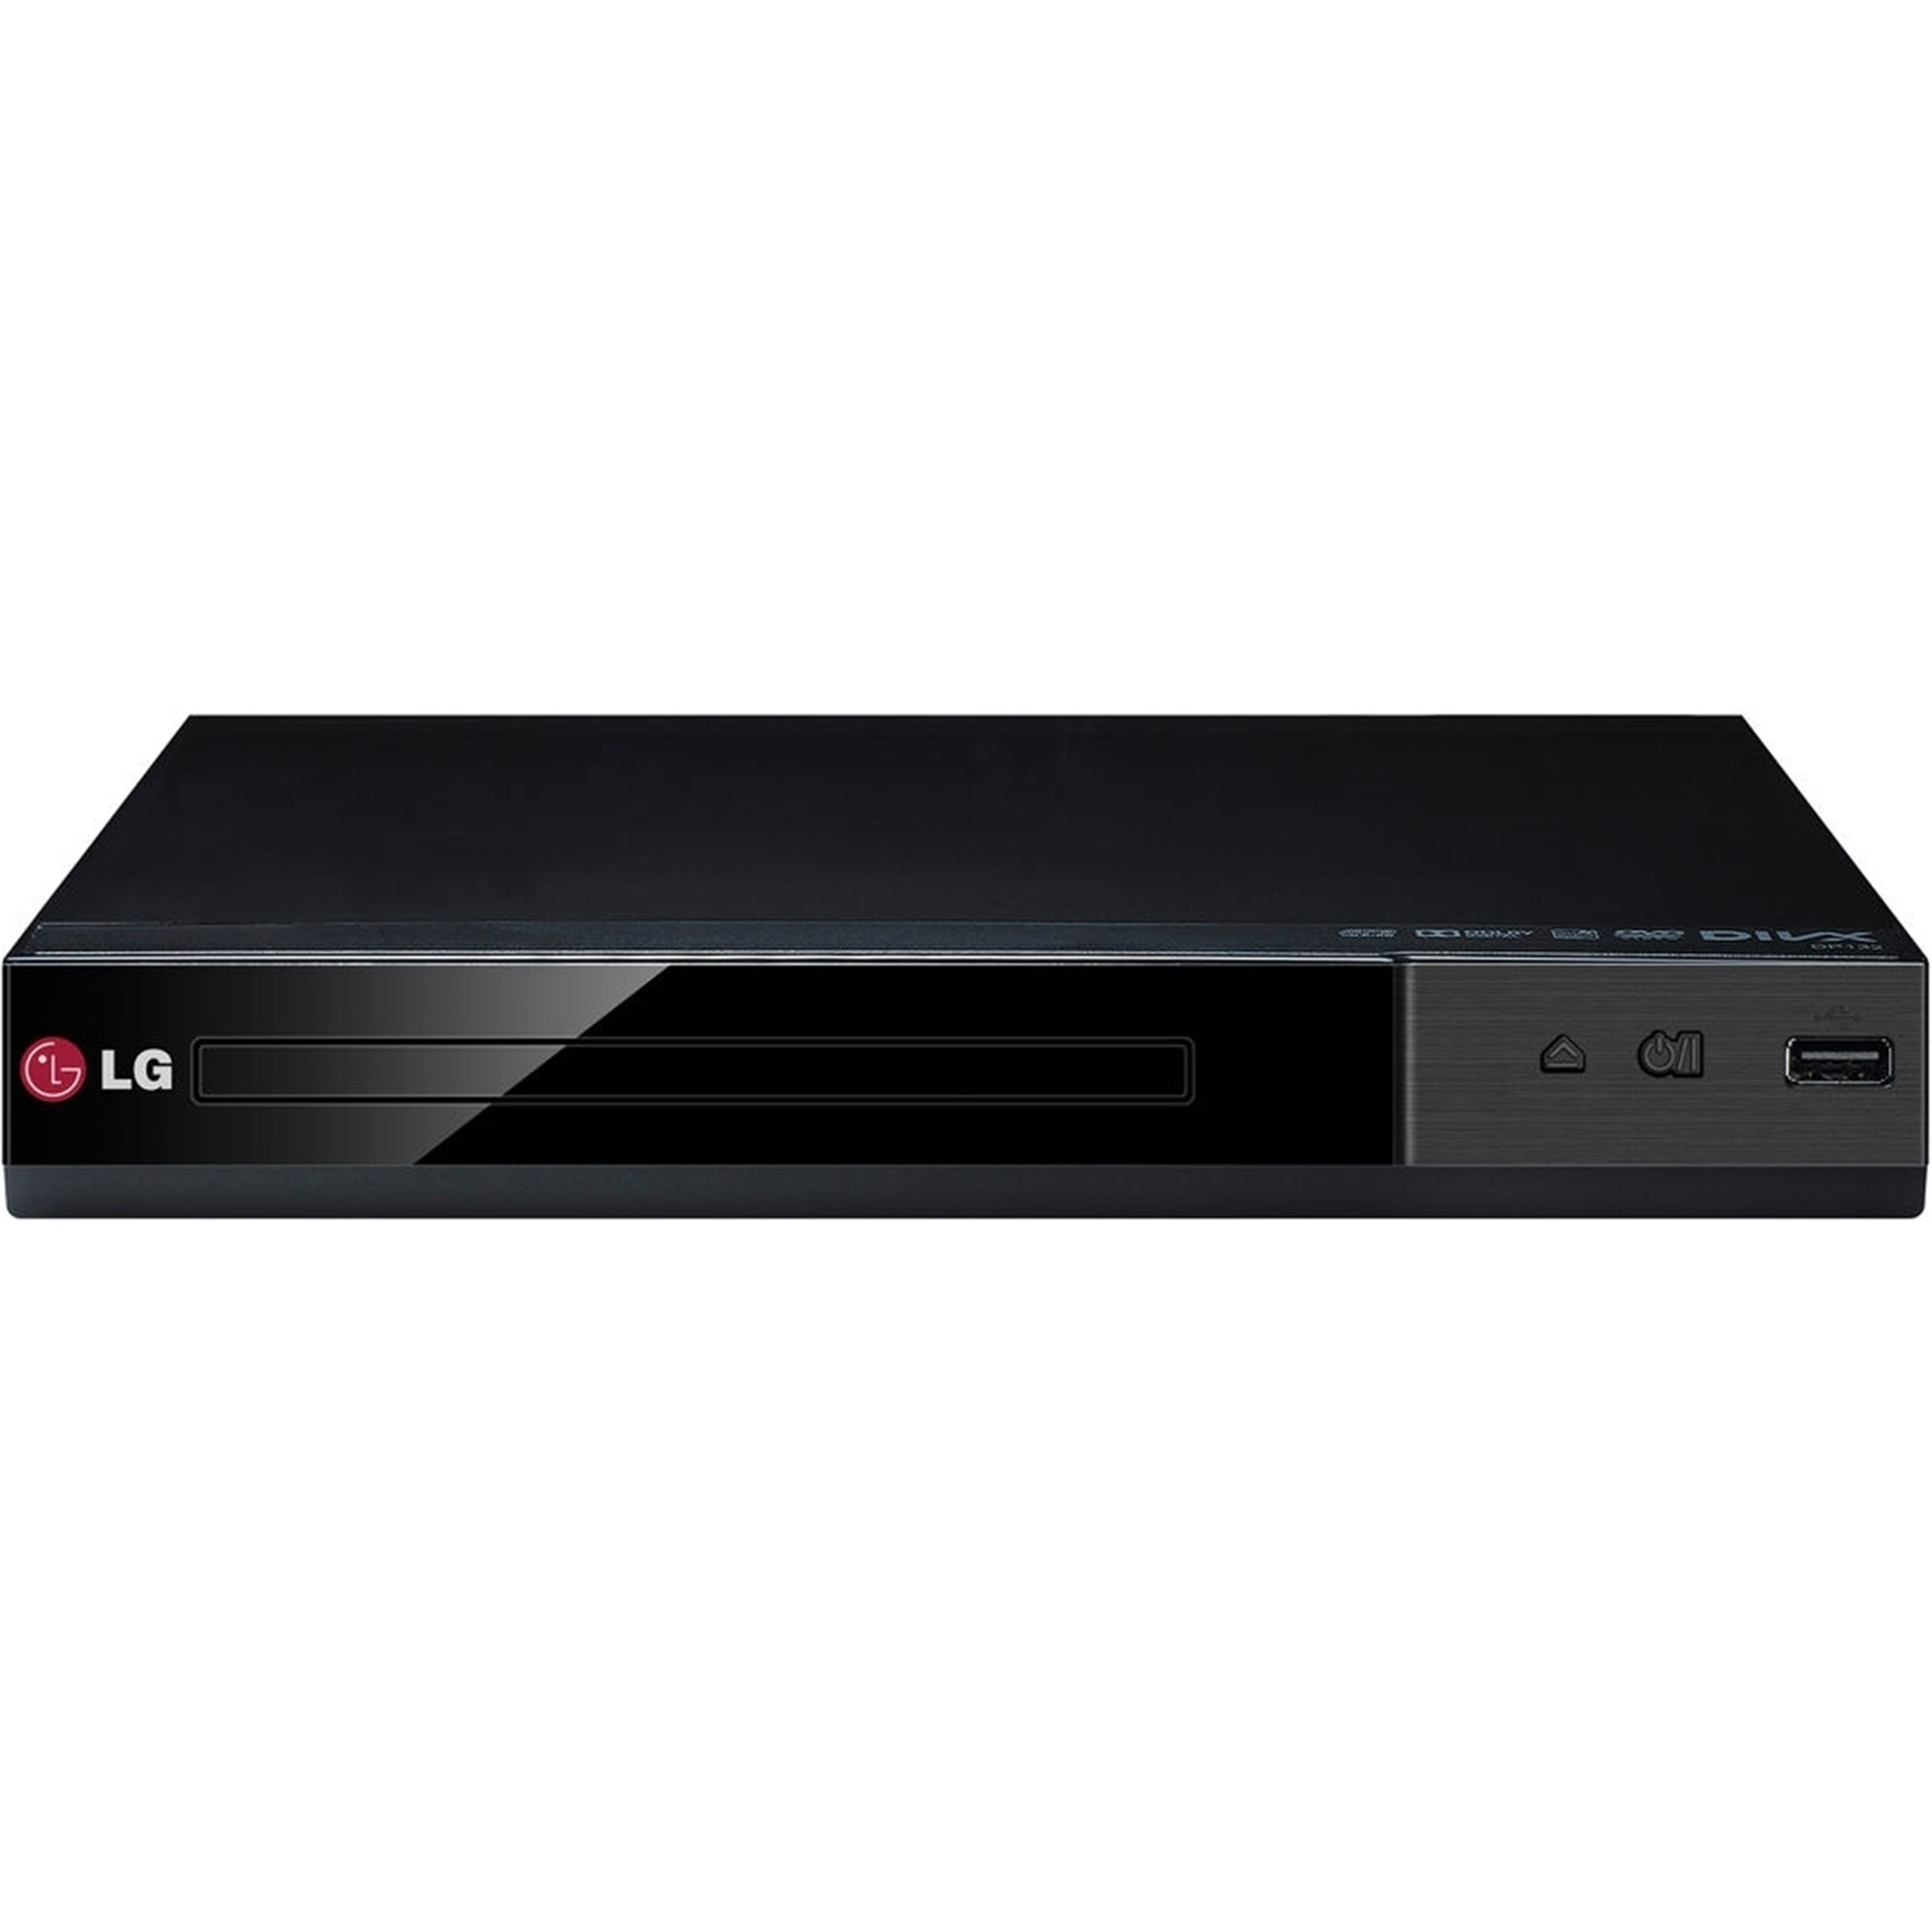 LG Electronics DP132 DVD Player (New Open Box) - 4...